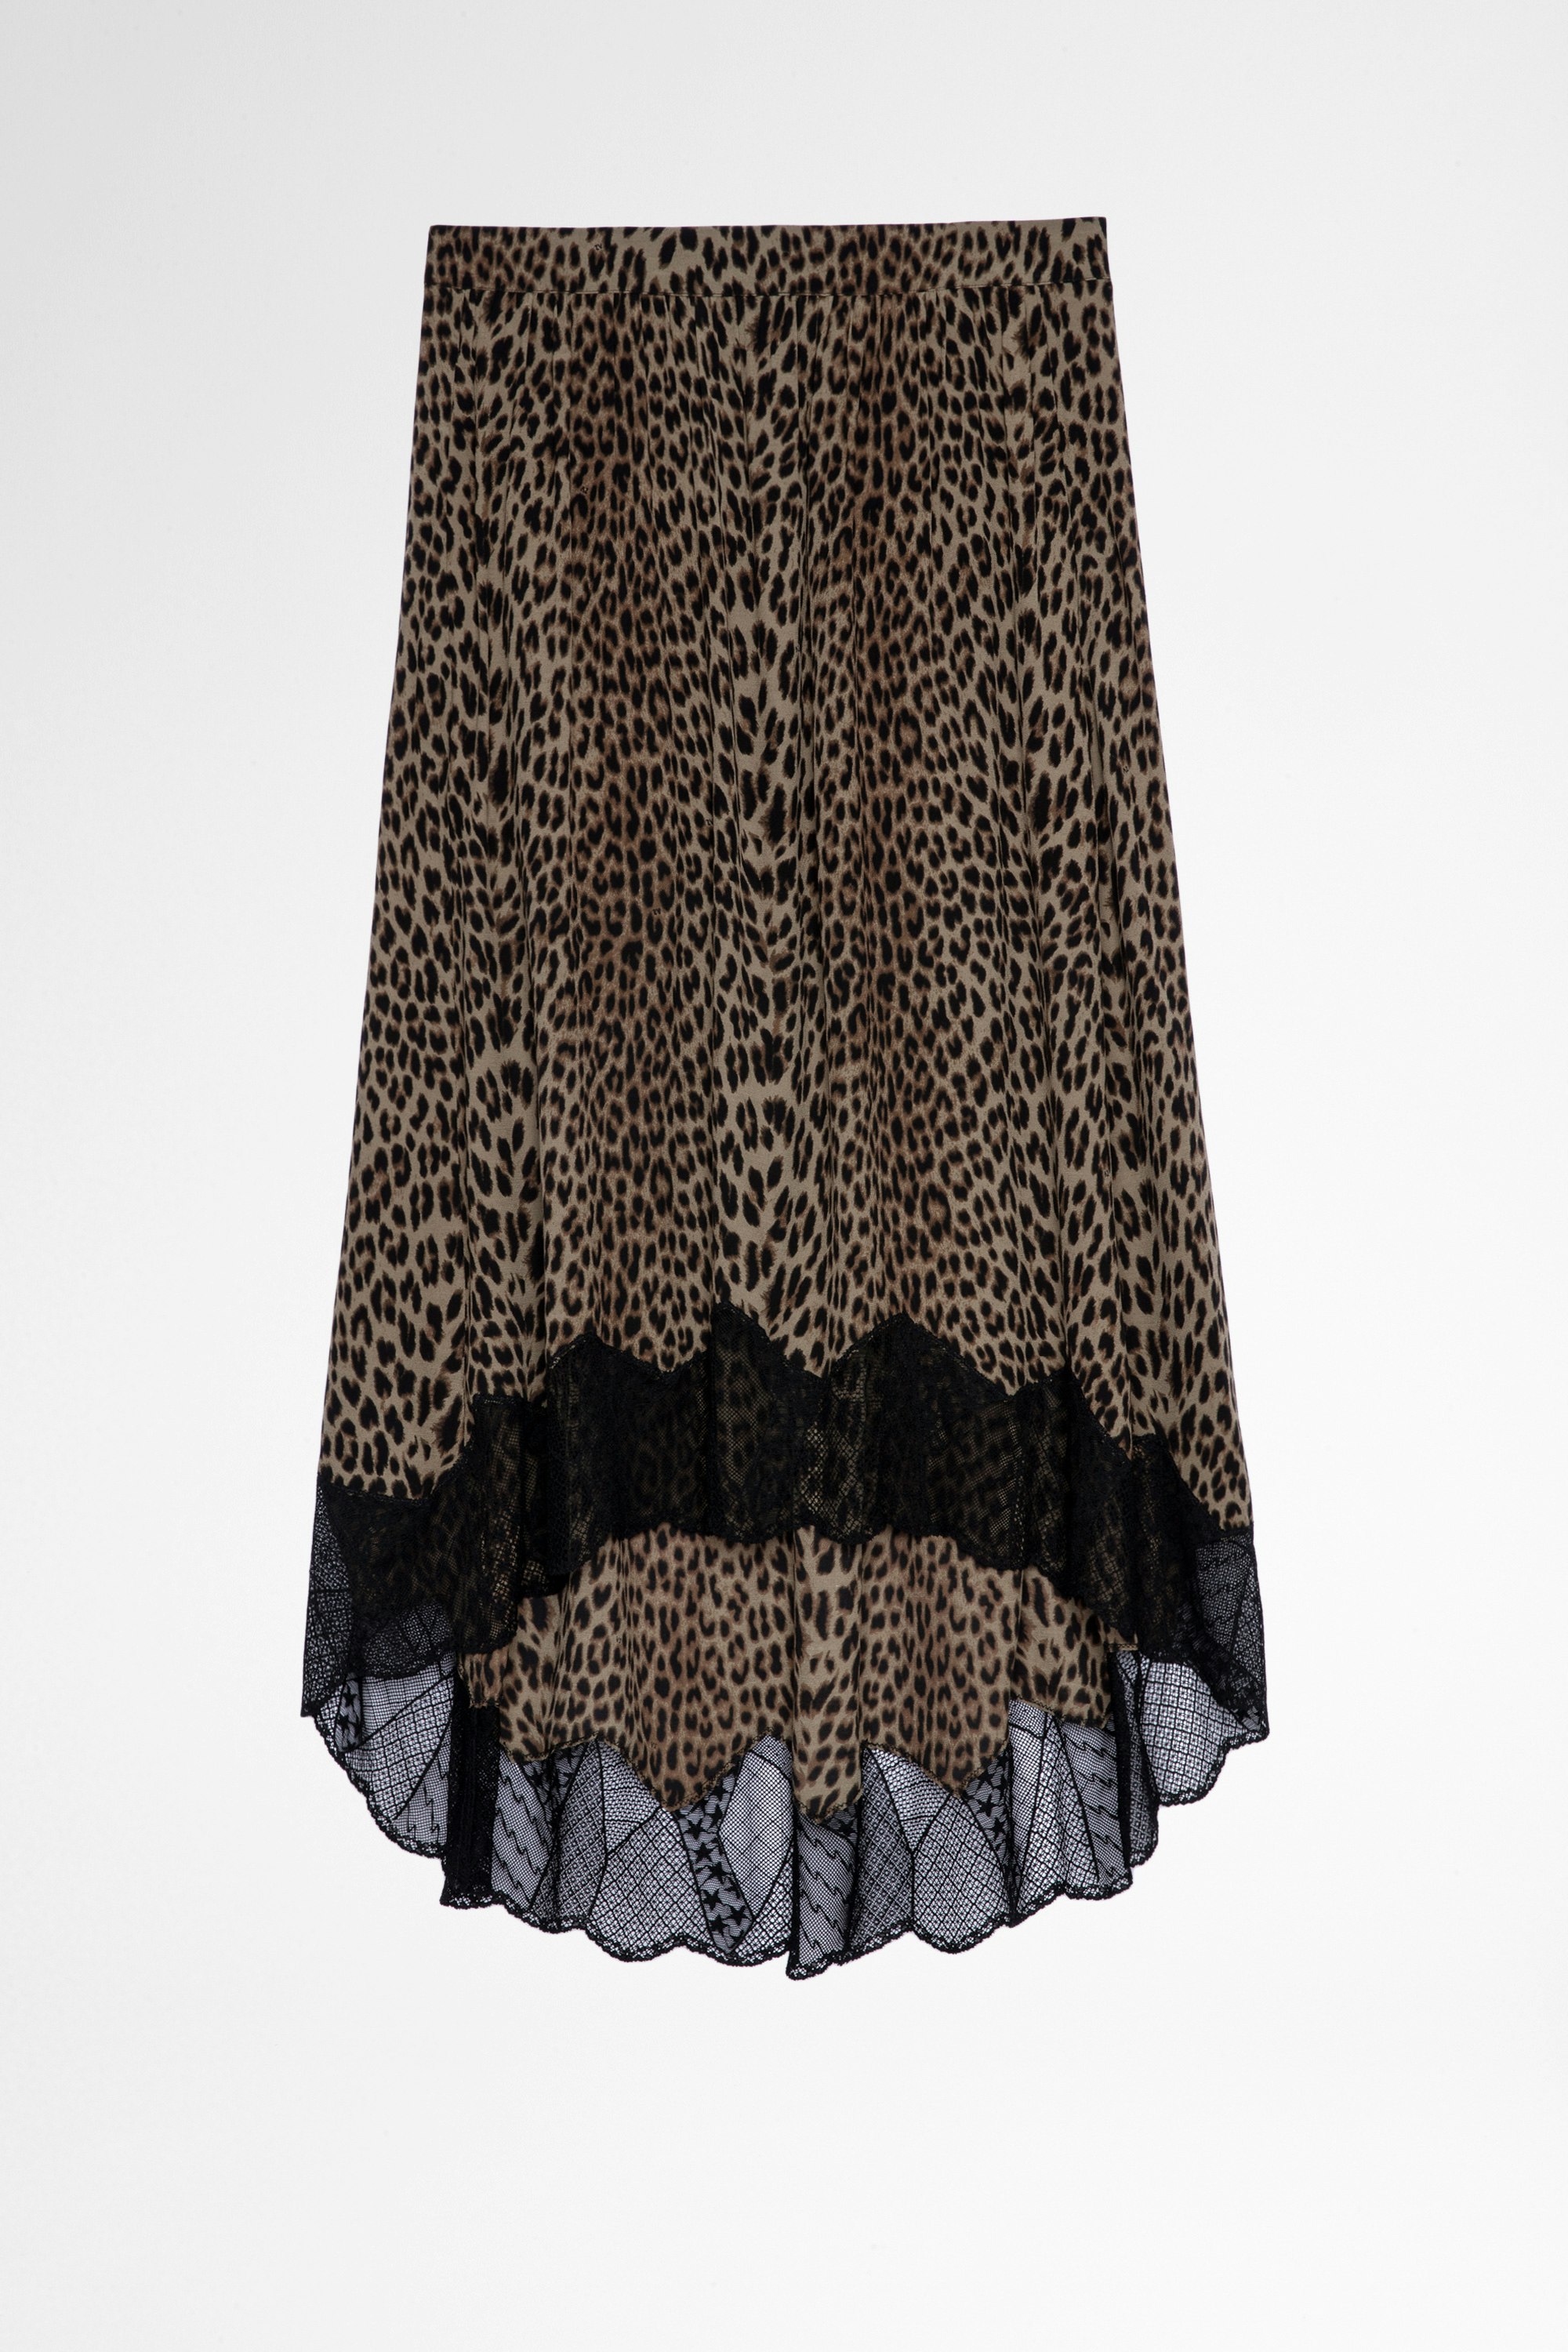 Rock Joslin Leopard Halblanger asymmetrischer Damenrock mit khakifarbenem Leoparden-Print